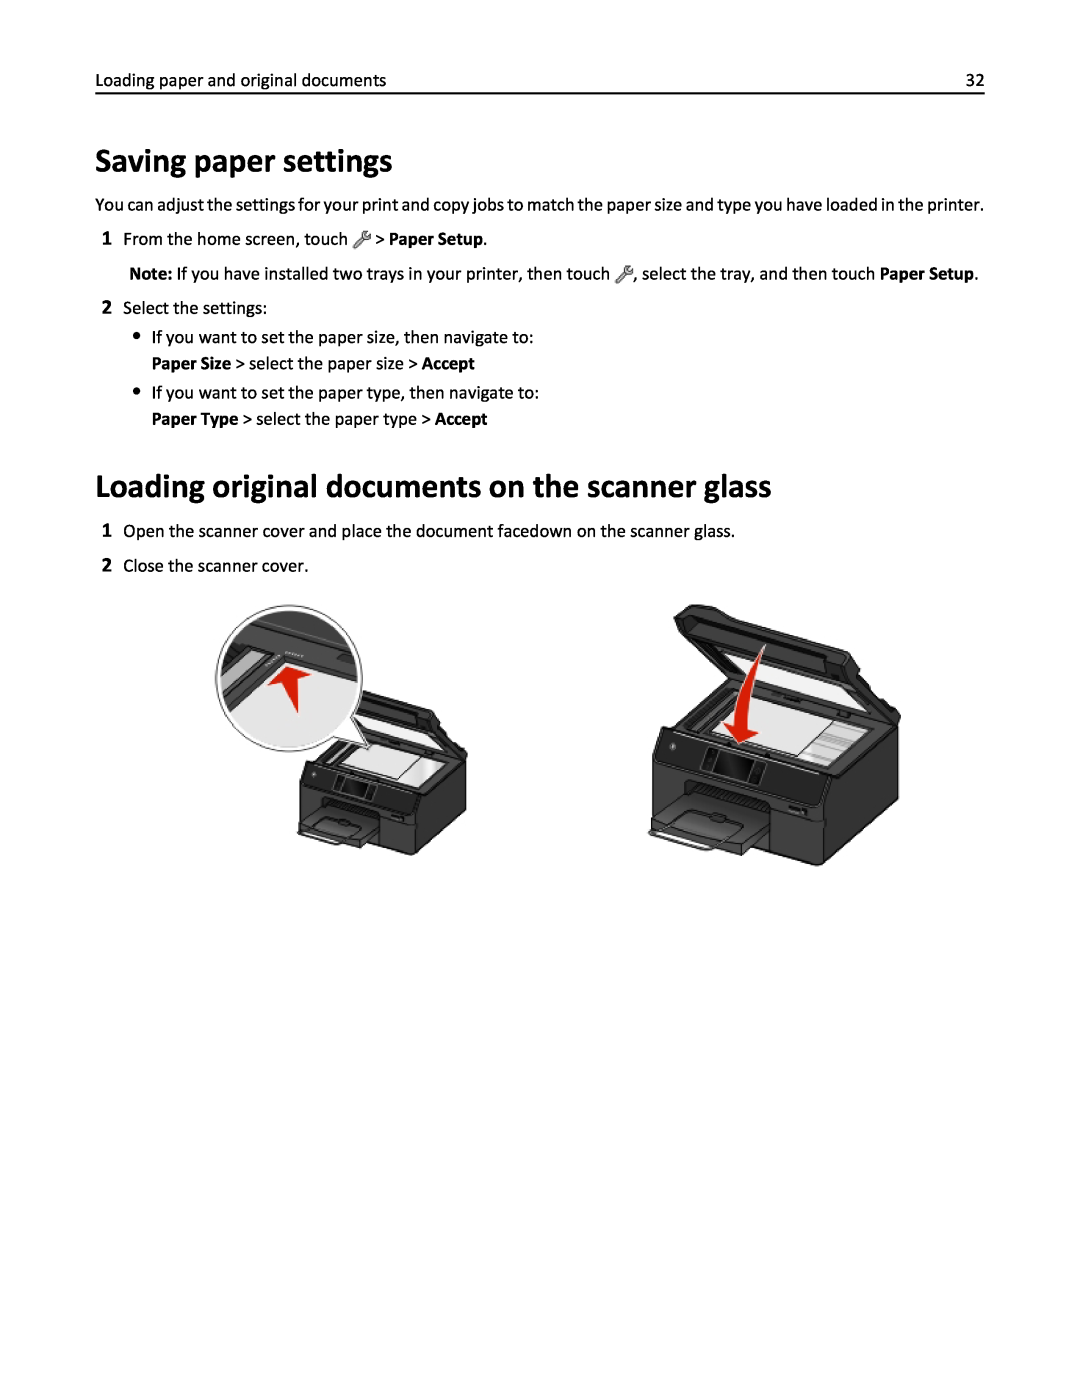 Lexmark 20E, 200 manual Saving paper settings, Loading original documents on the scanner glass 